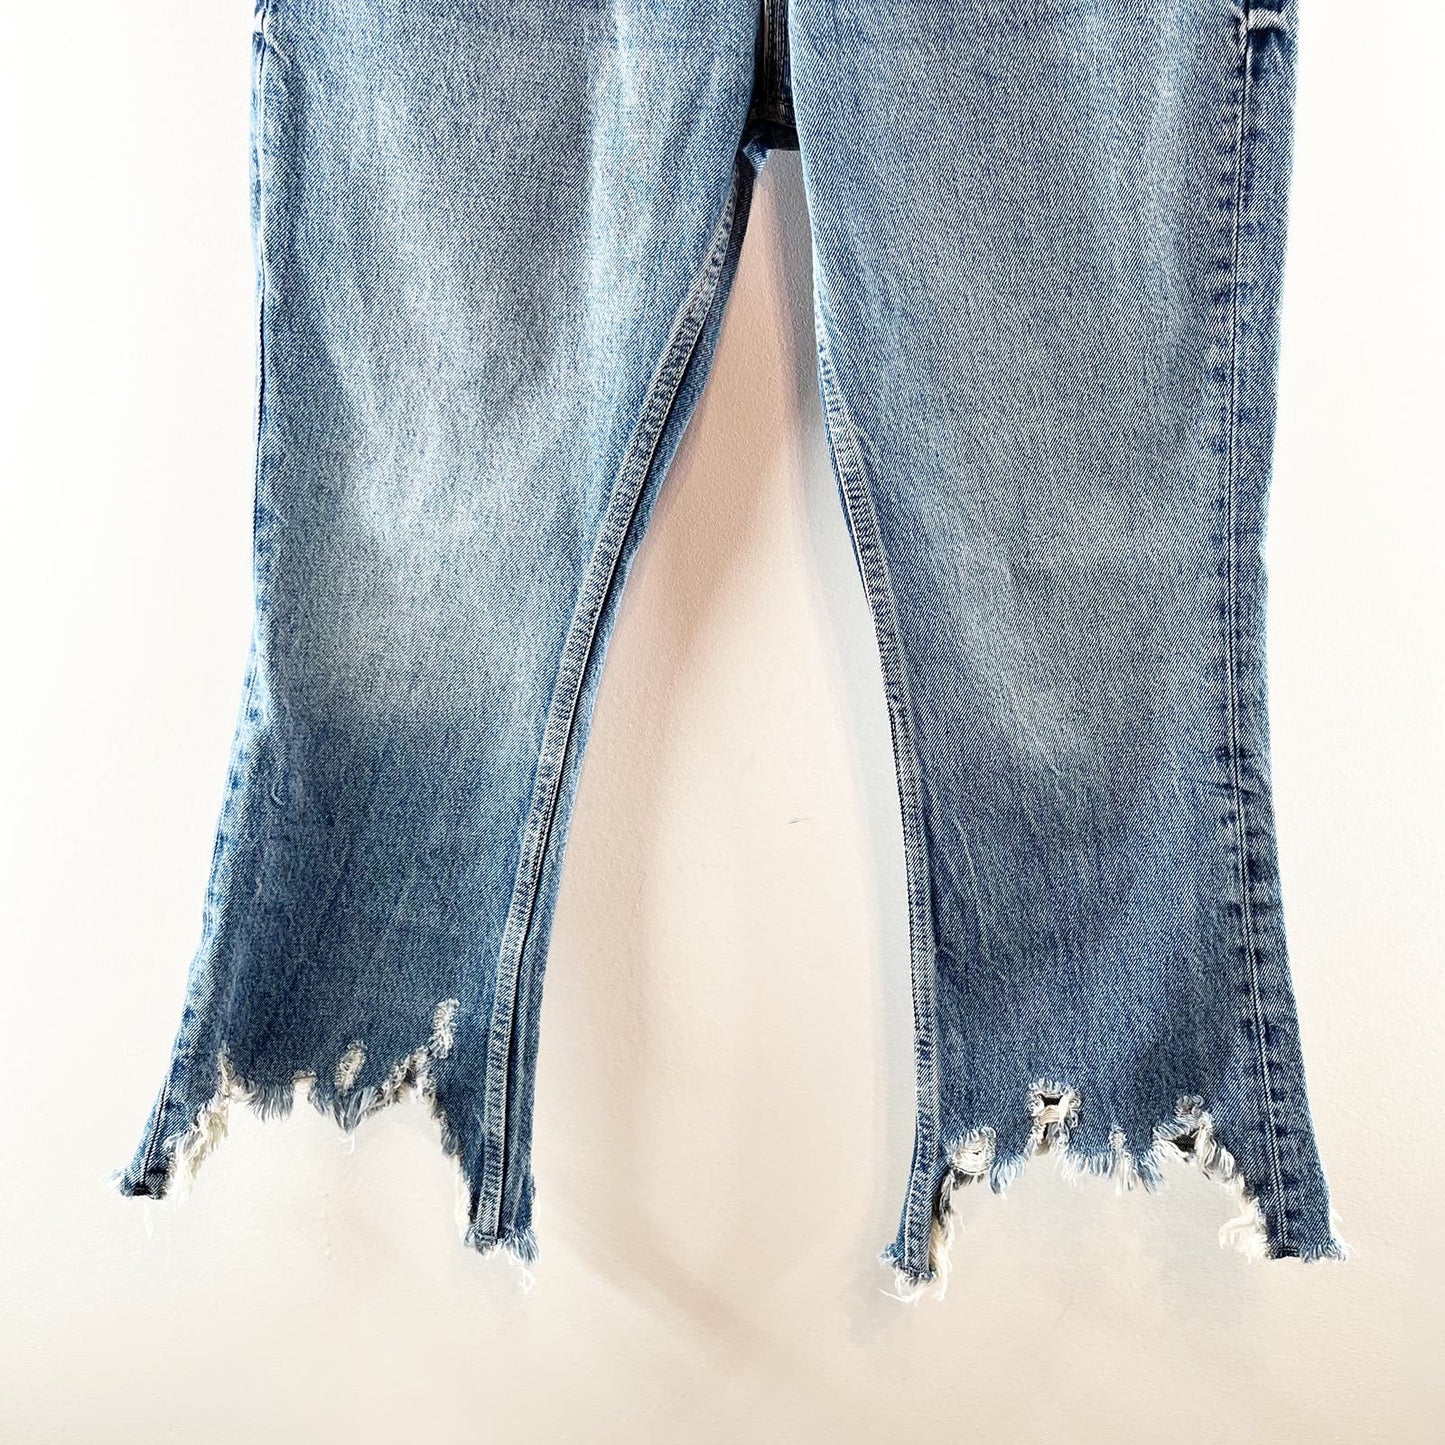 ZARA High Rise Cropped Chewed Hem Frayed Mini Flare Jeans Denim Blue 6